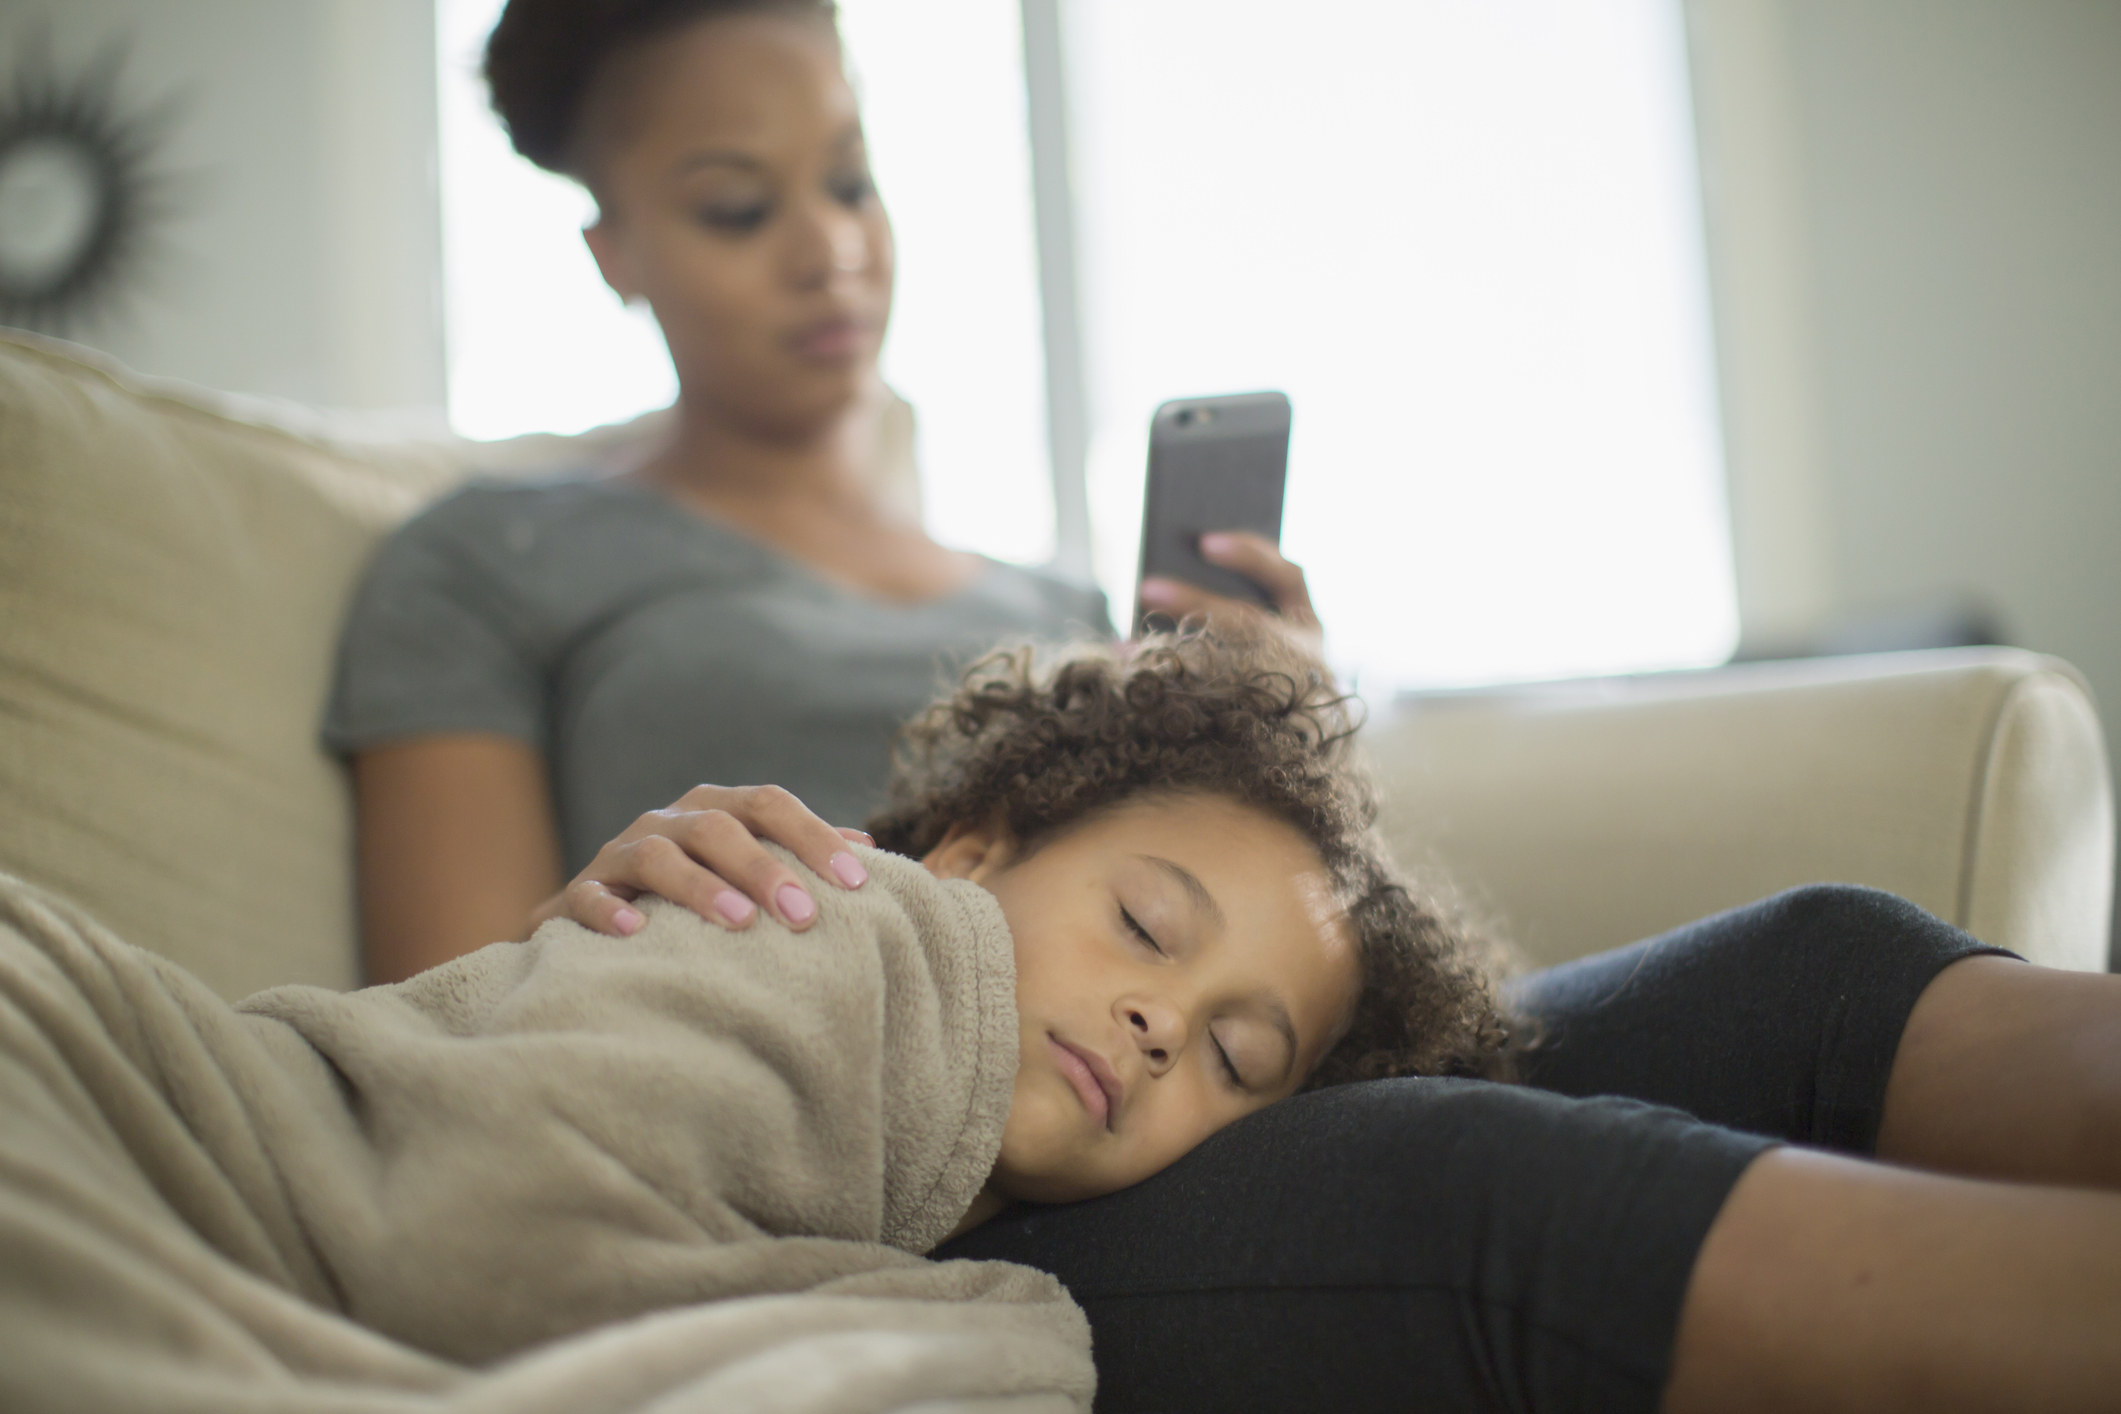 A parent checks their phone while a child naps on their lap